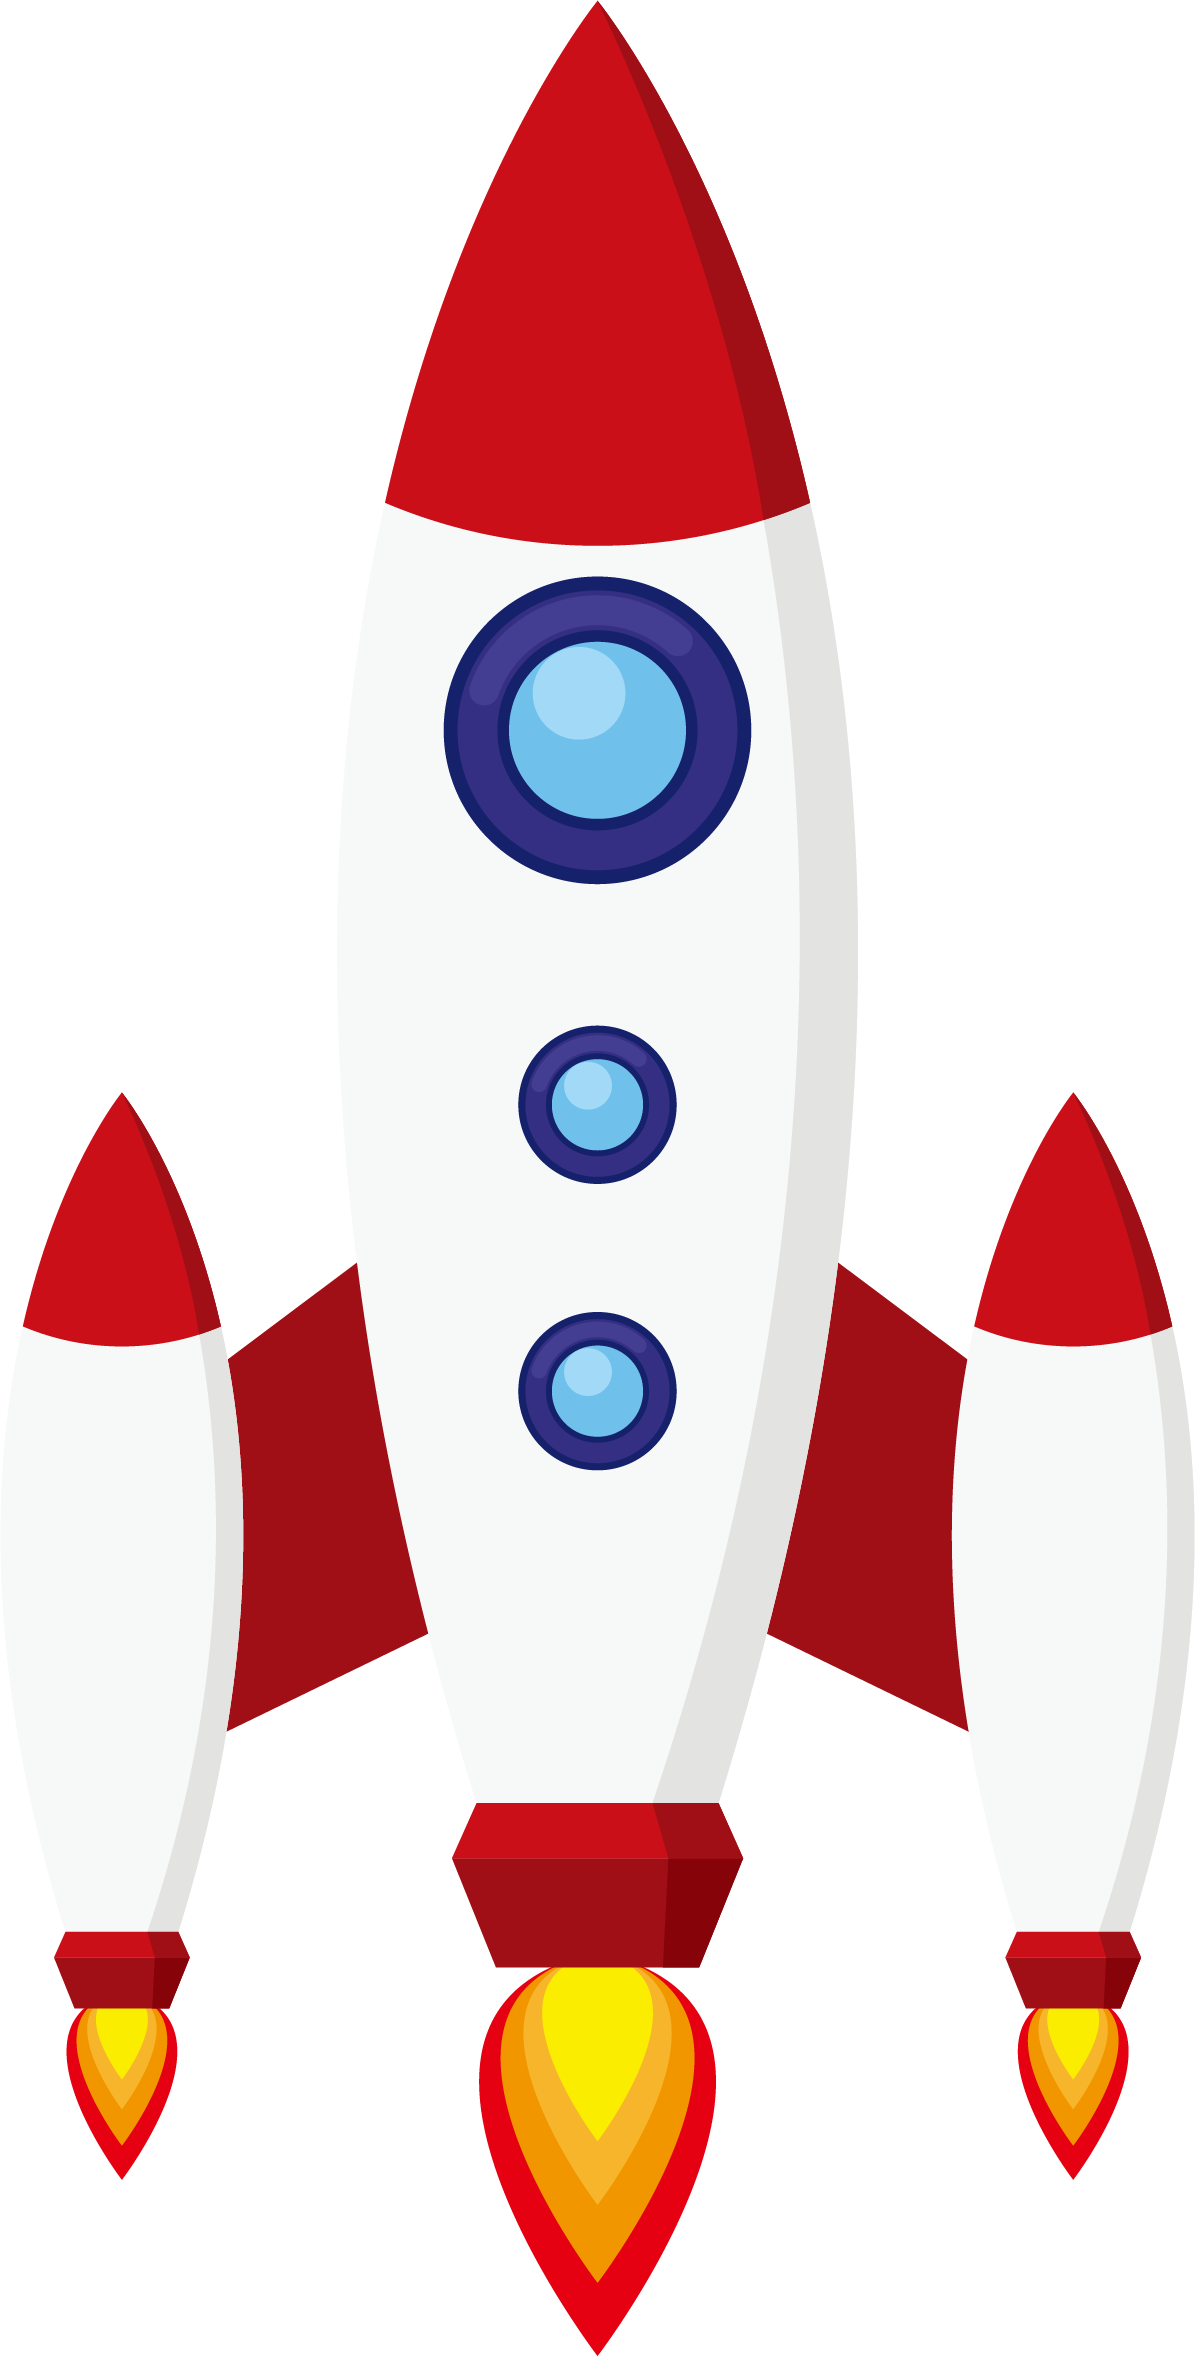 Spacecraft Rocket PNG Image